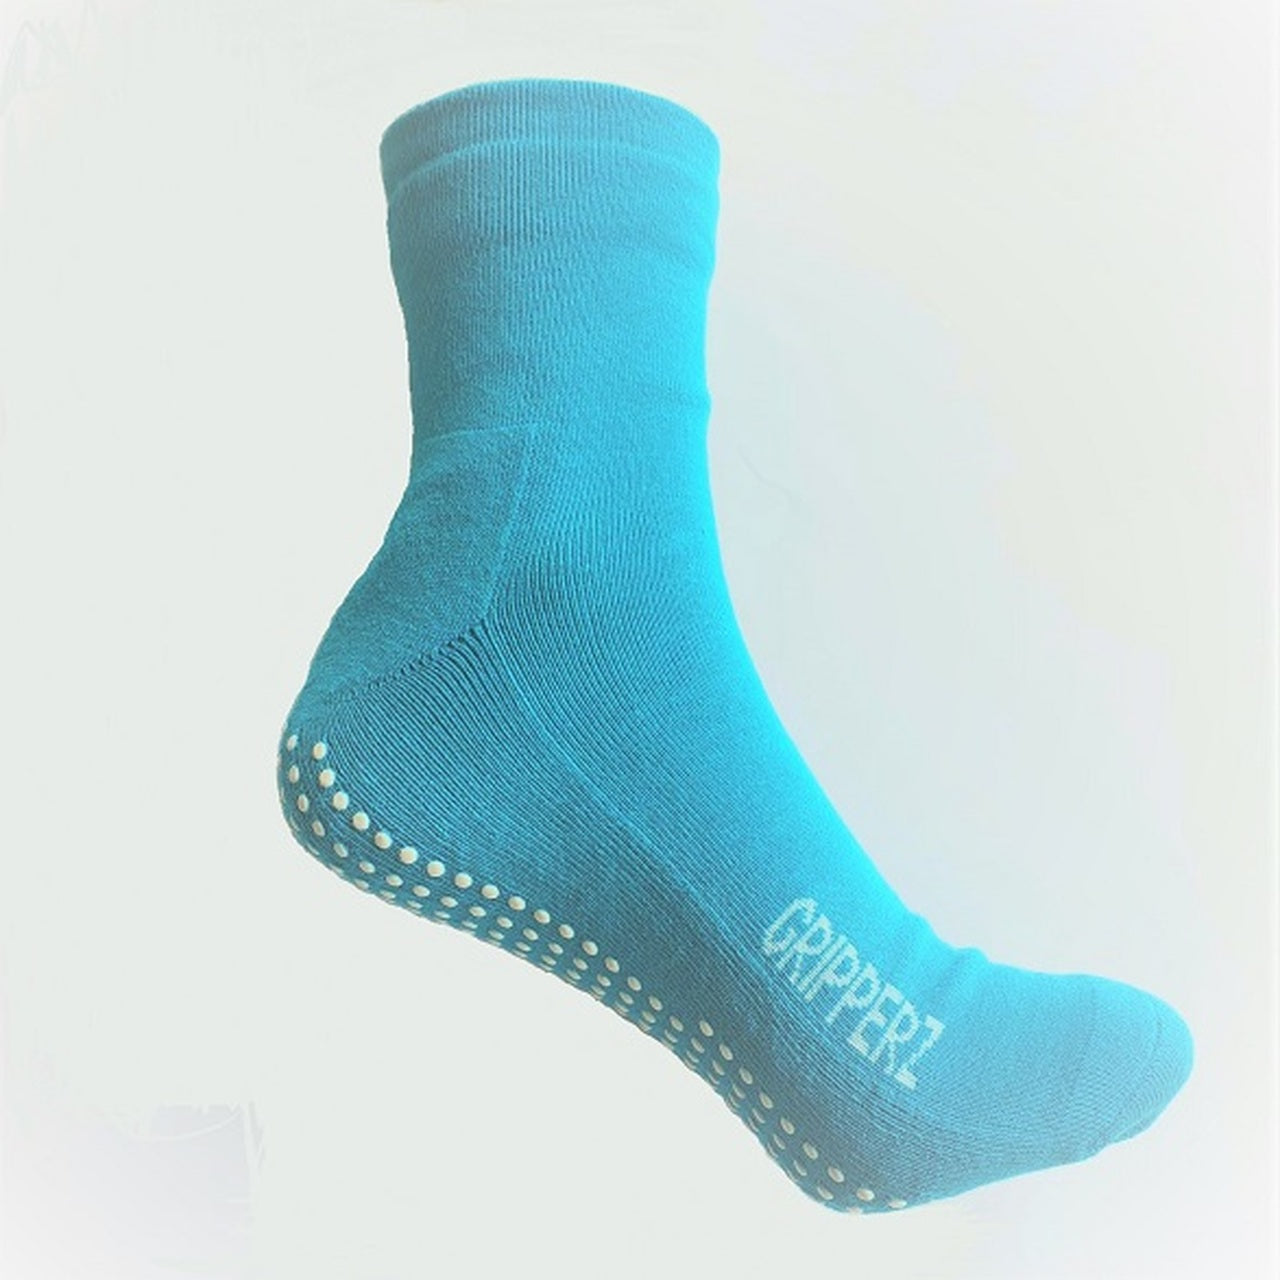 Maxi Hospital Non-Slip Socks in Teal - The Sockery